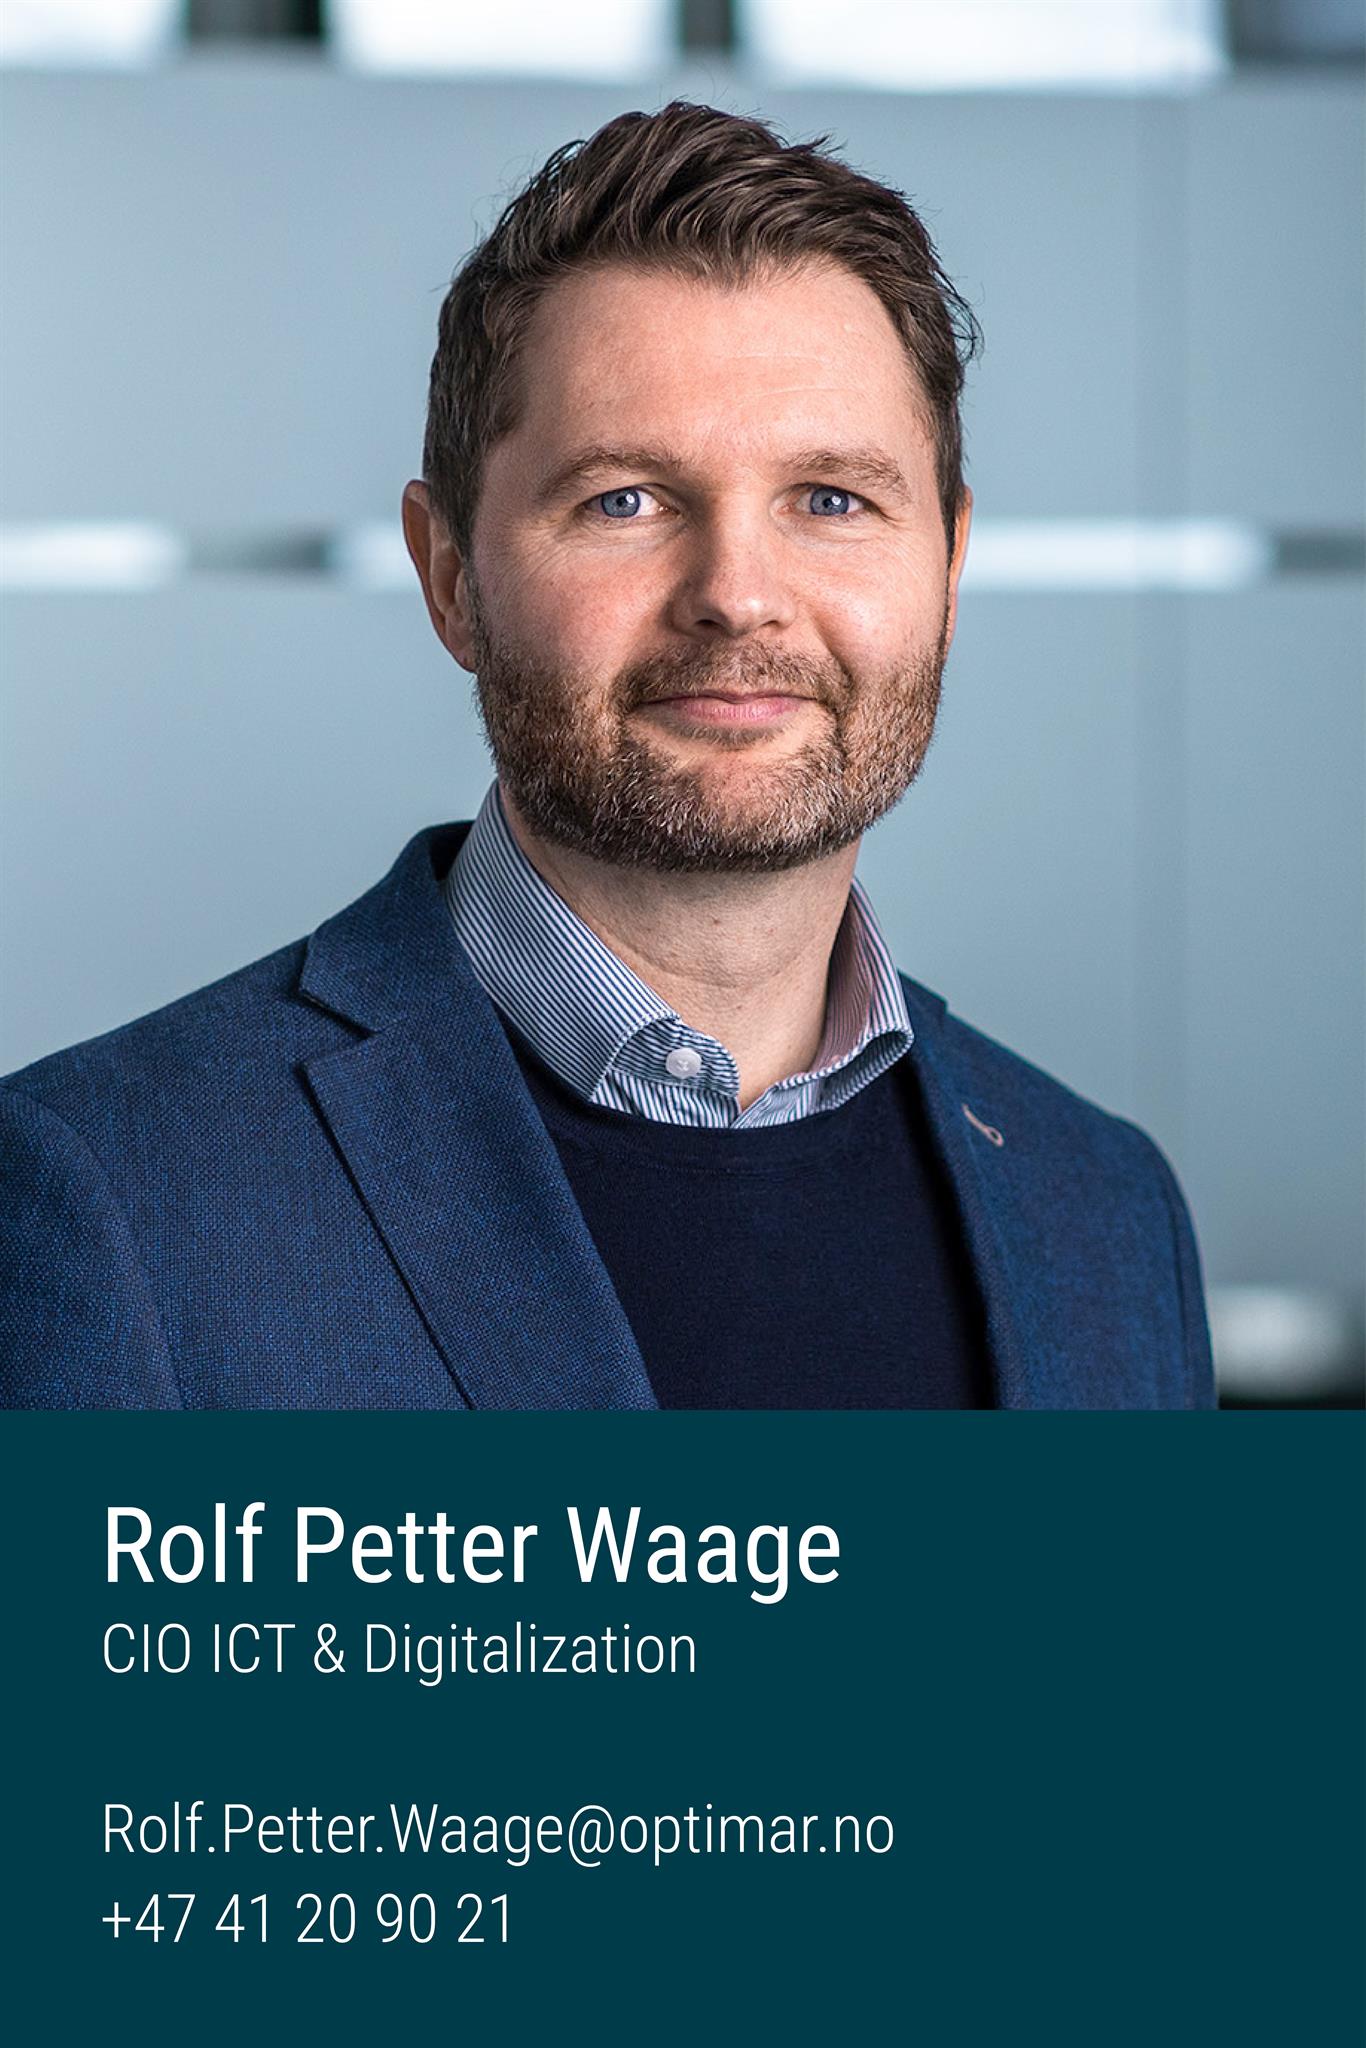 Rolf Petter Waage